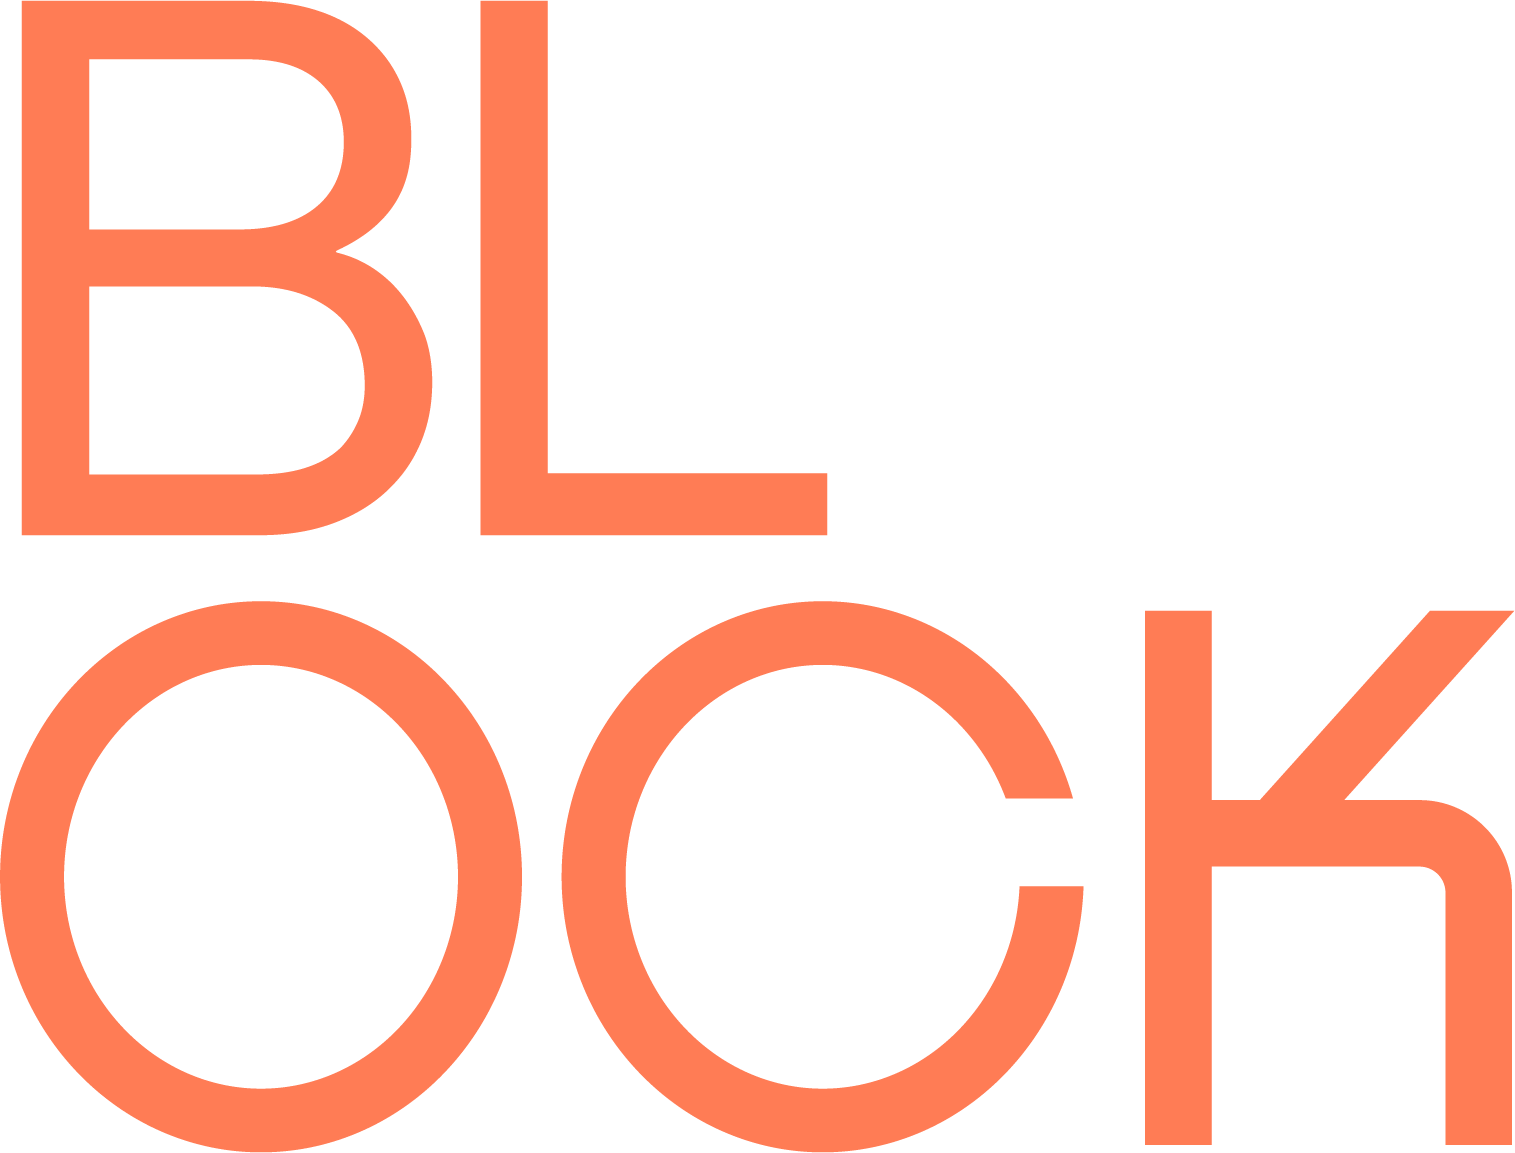 Block Renovation Logo